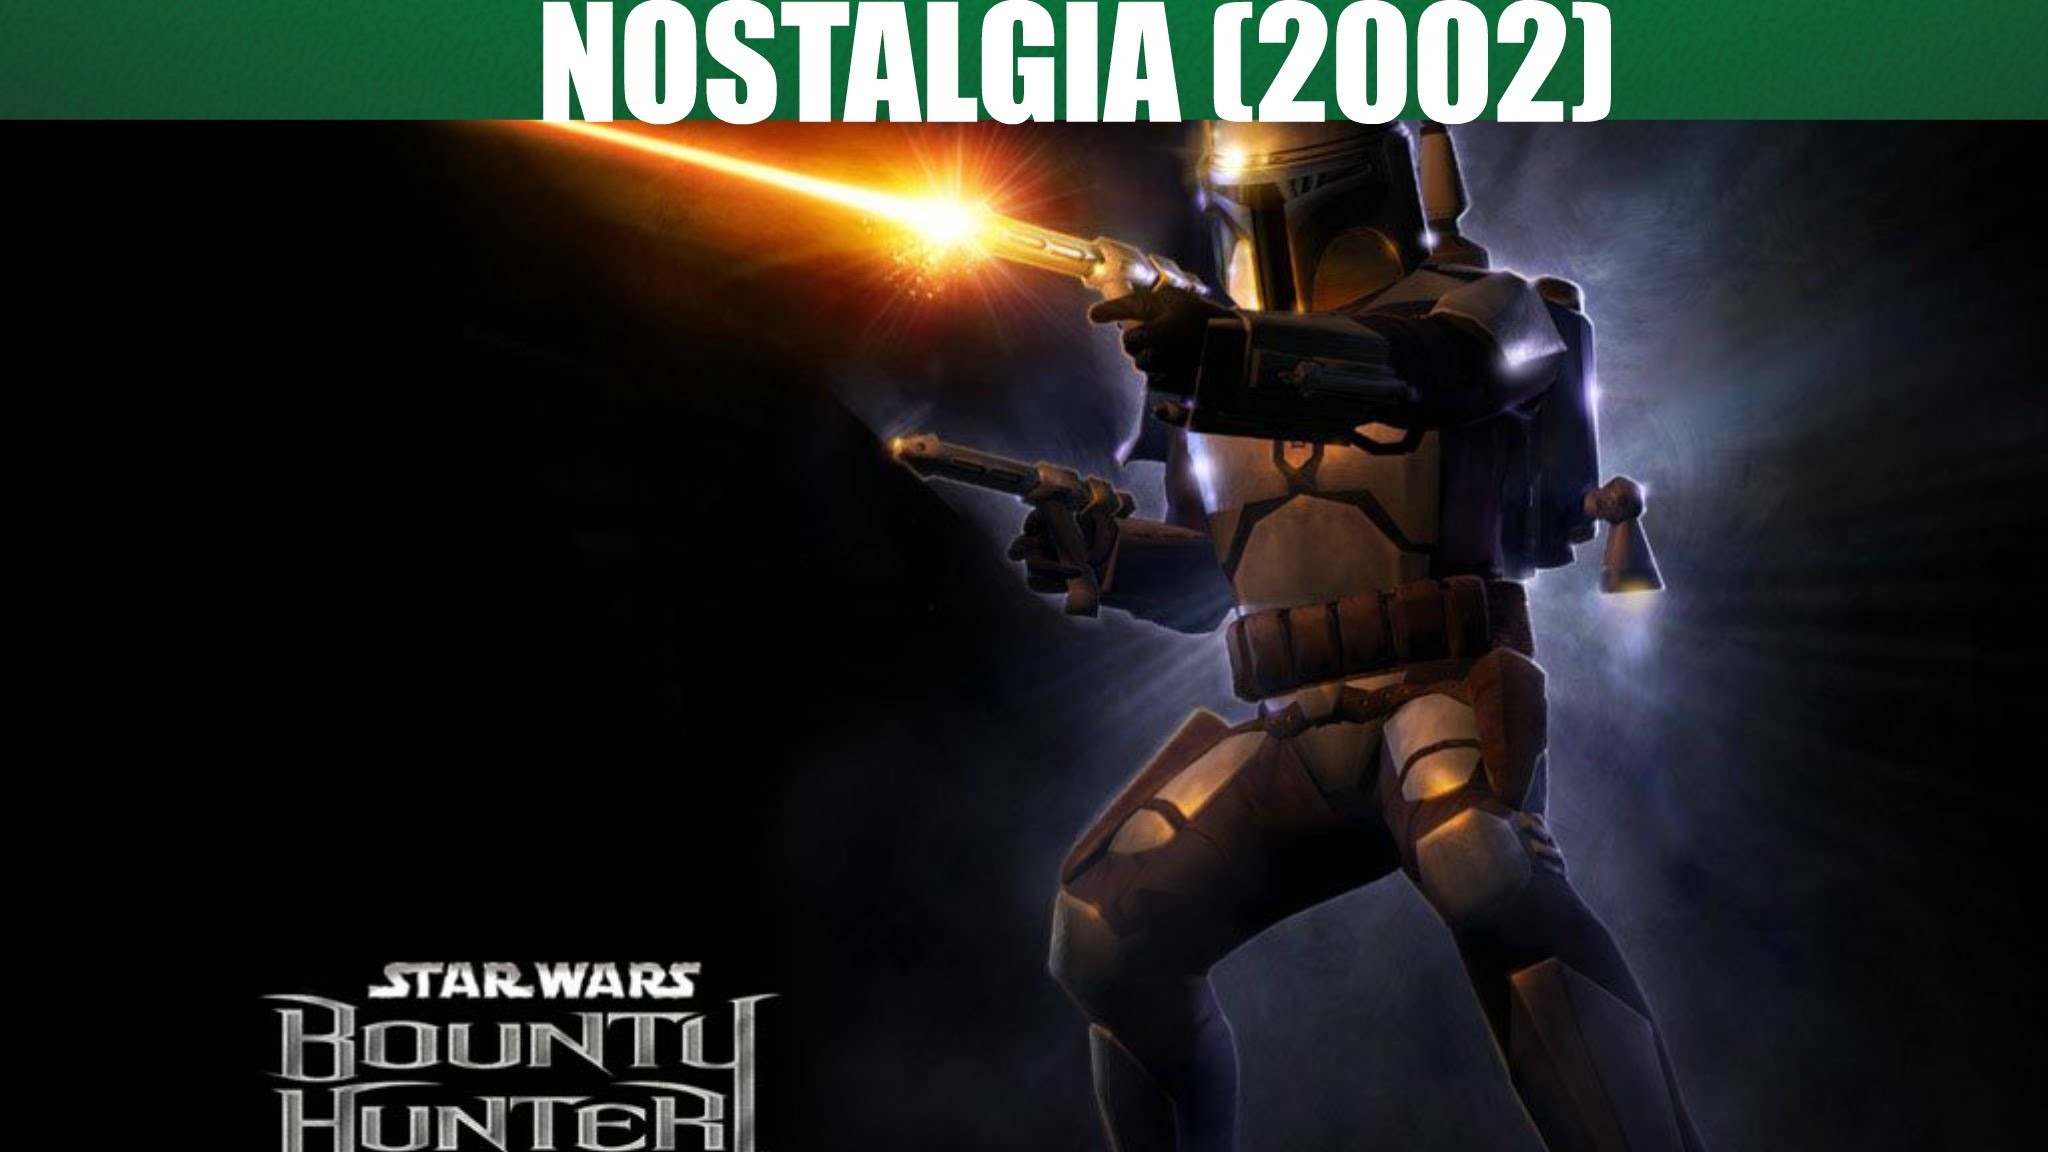 2048x1152 Star Wars Bounty Hunter Nostalgia (2002)